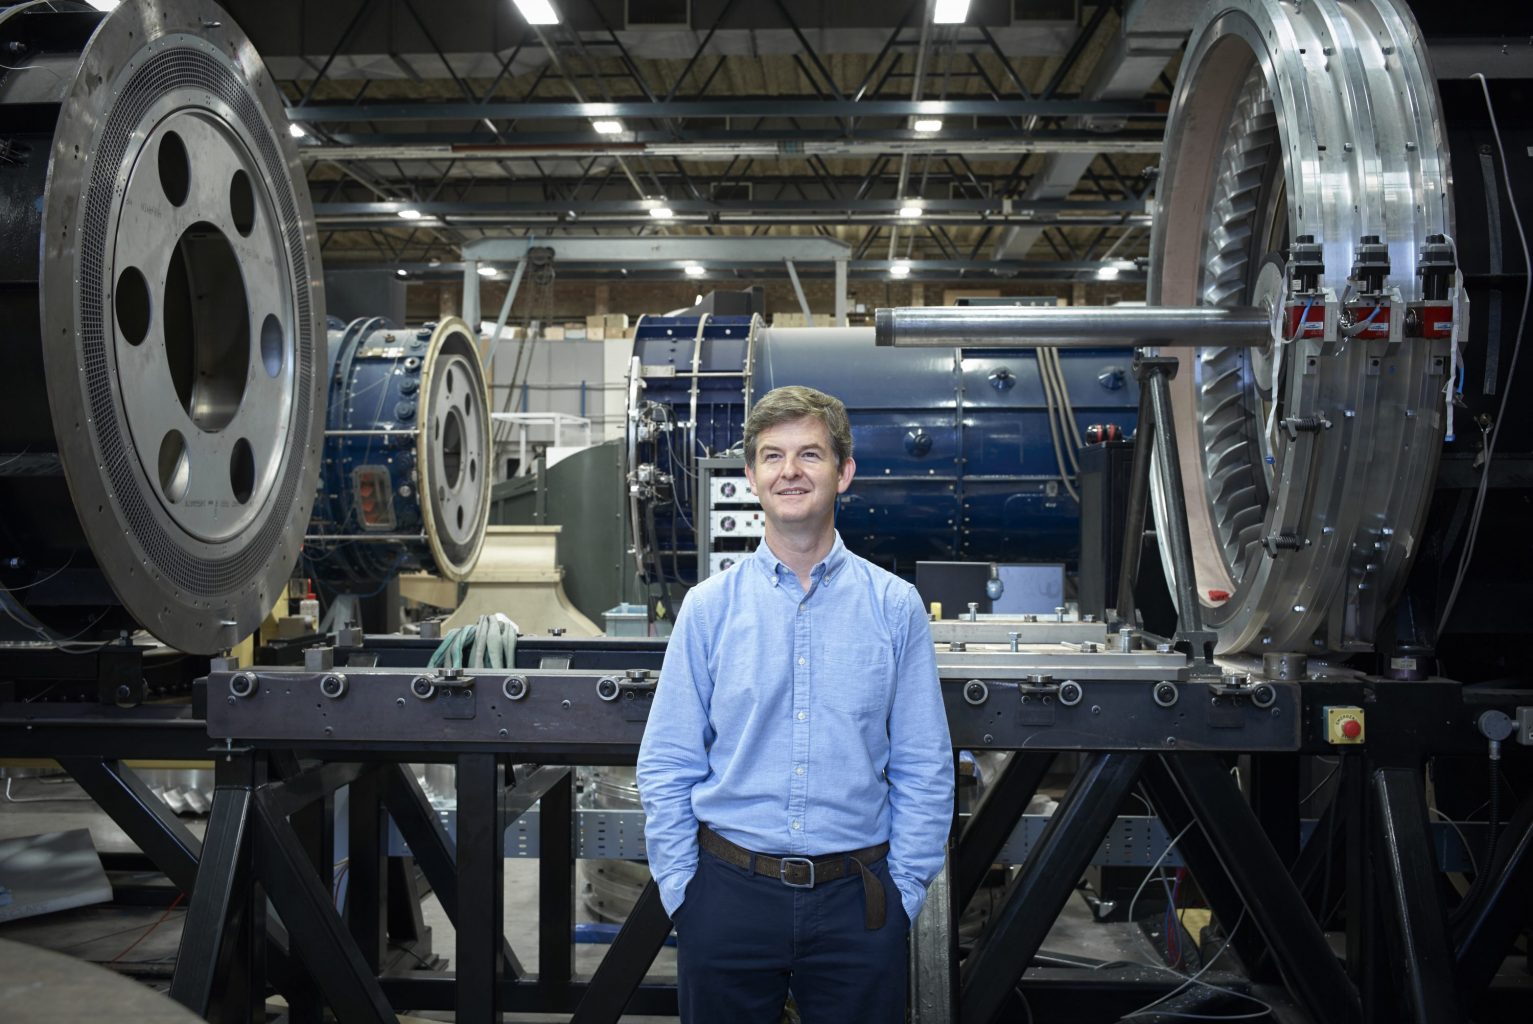 Professor Rob Miller standing in front of engine 